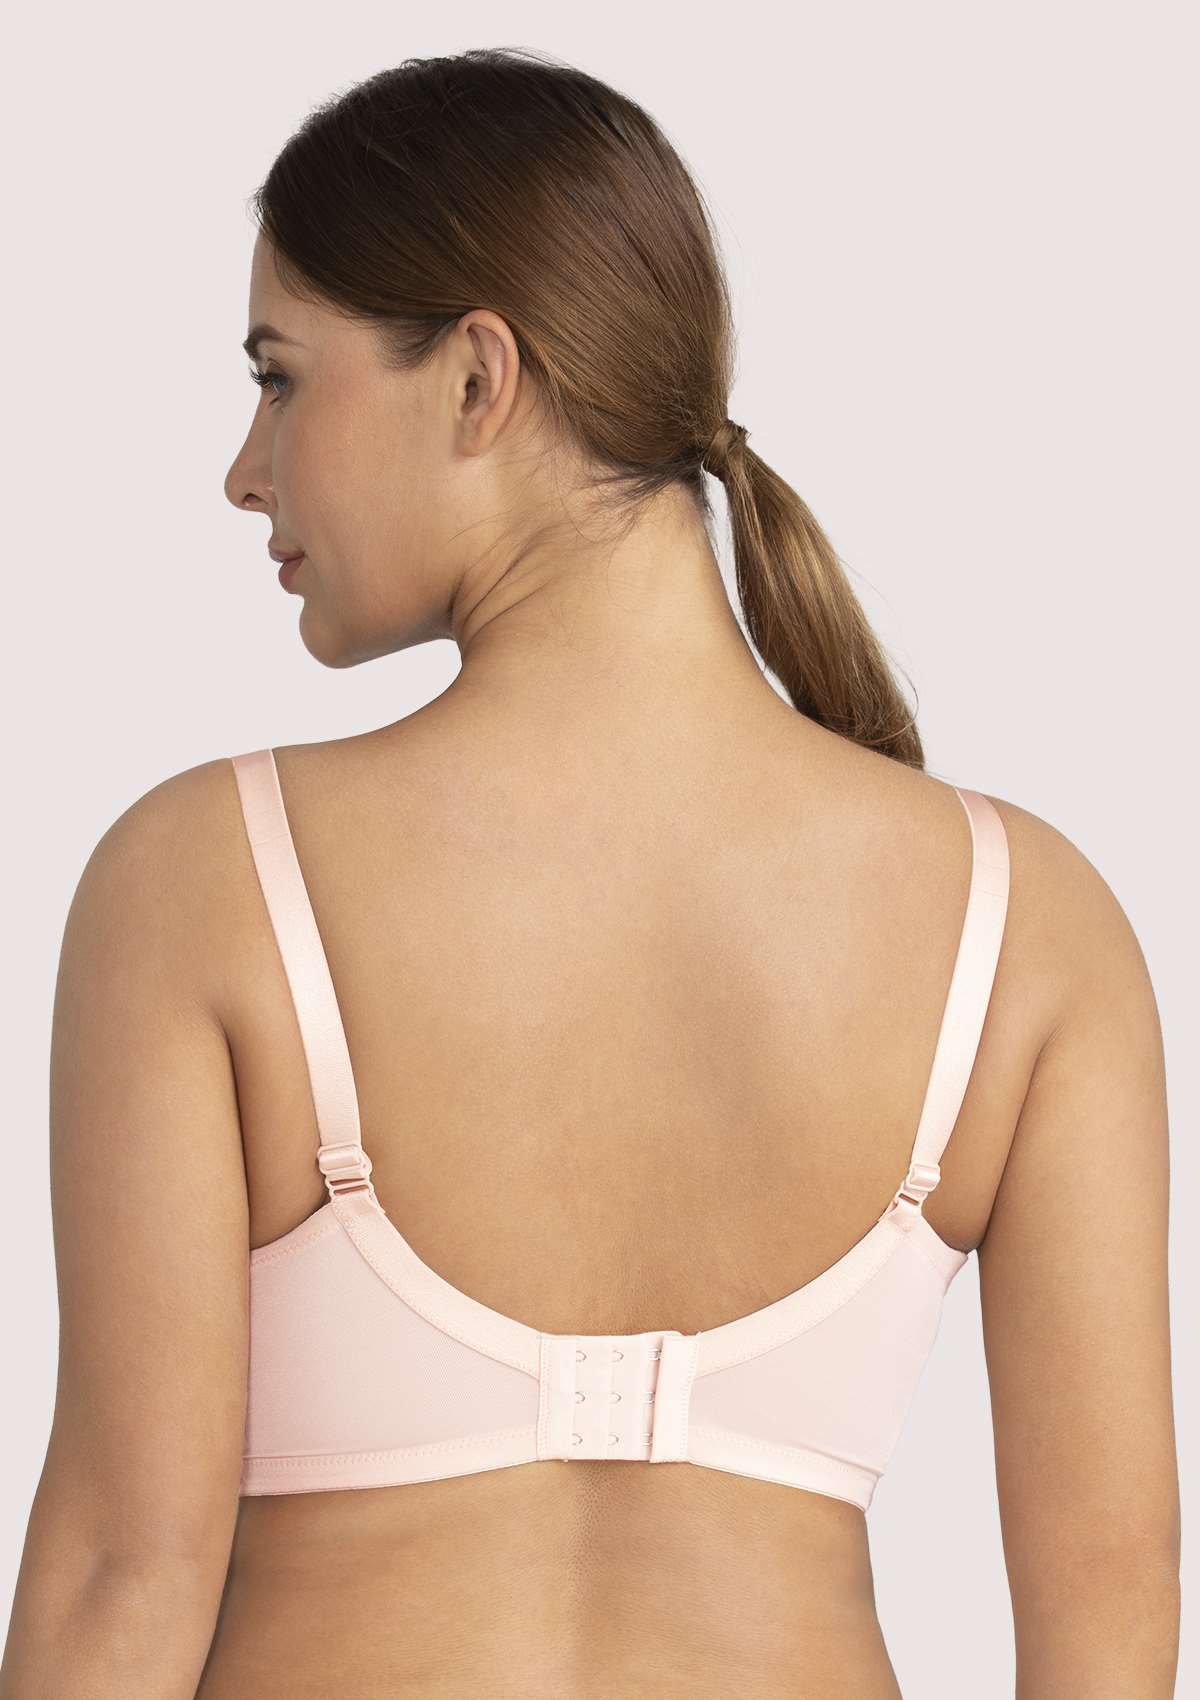 HSIA Sunflower Matching Bra And Panties Set: Comfortable Plus Size Bra - Pink / 38 / I